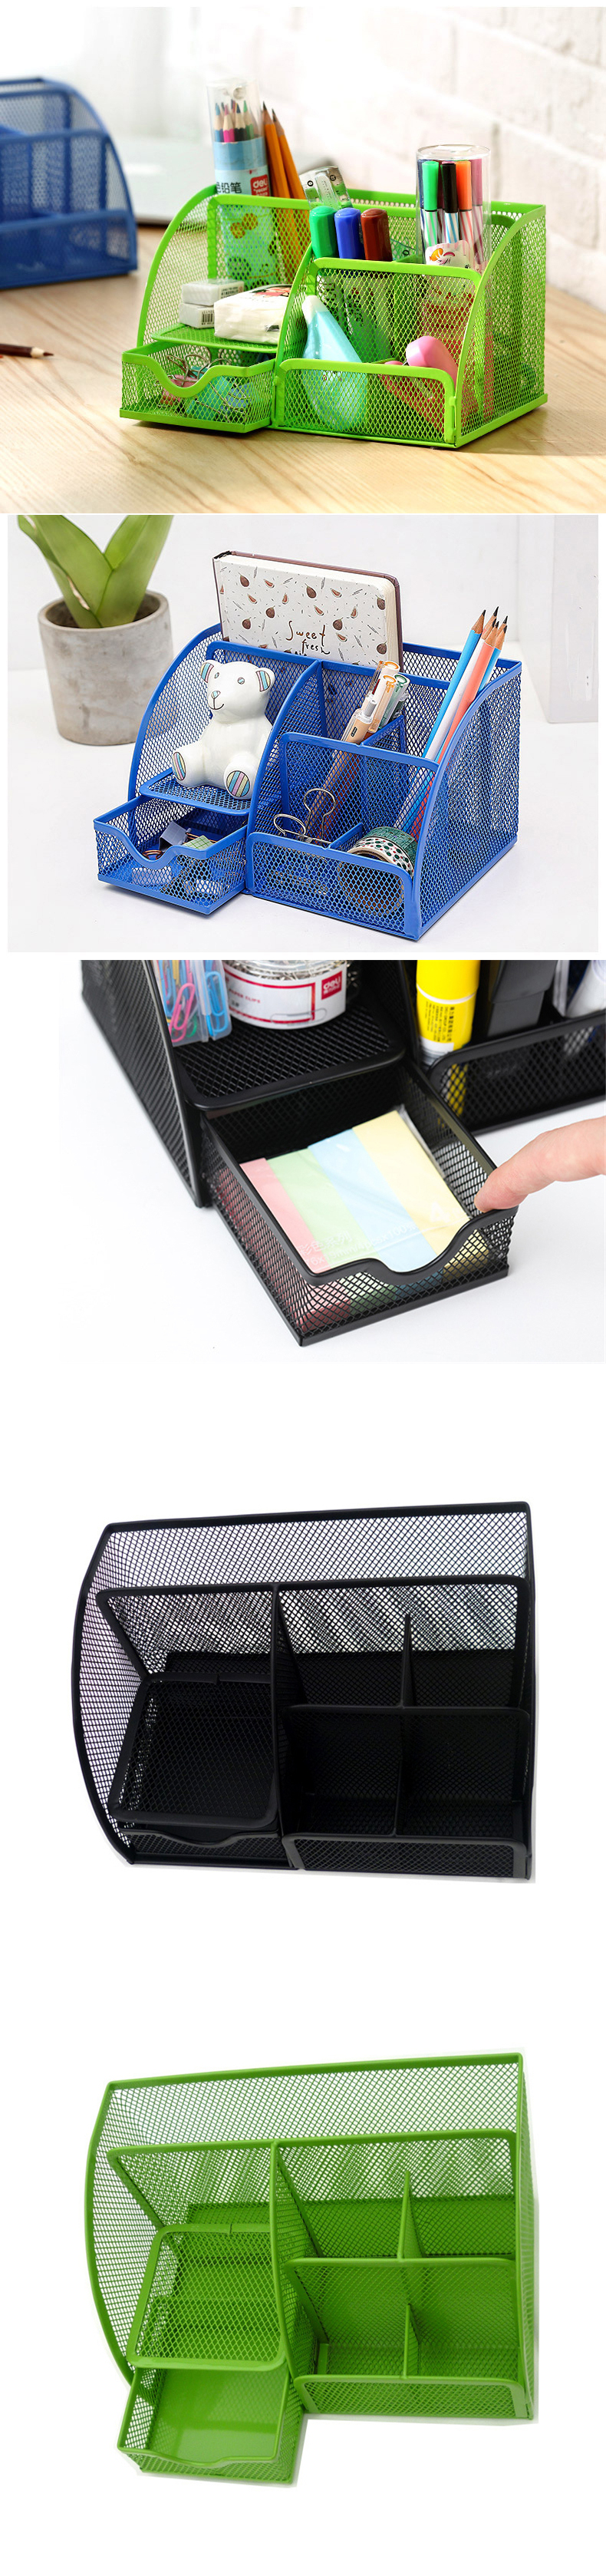 Metal-Pen-Holder-Desktop-Organizer-Student-Cosmetic-Makeup-Storage-Box-Racks-7-Grids-desk-Accessorie-1559999-2